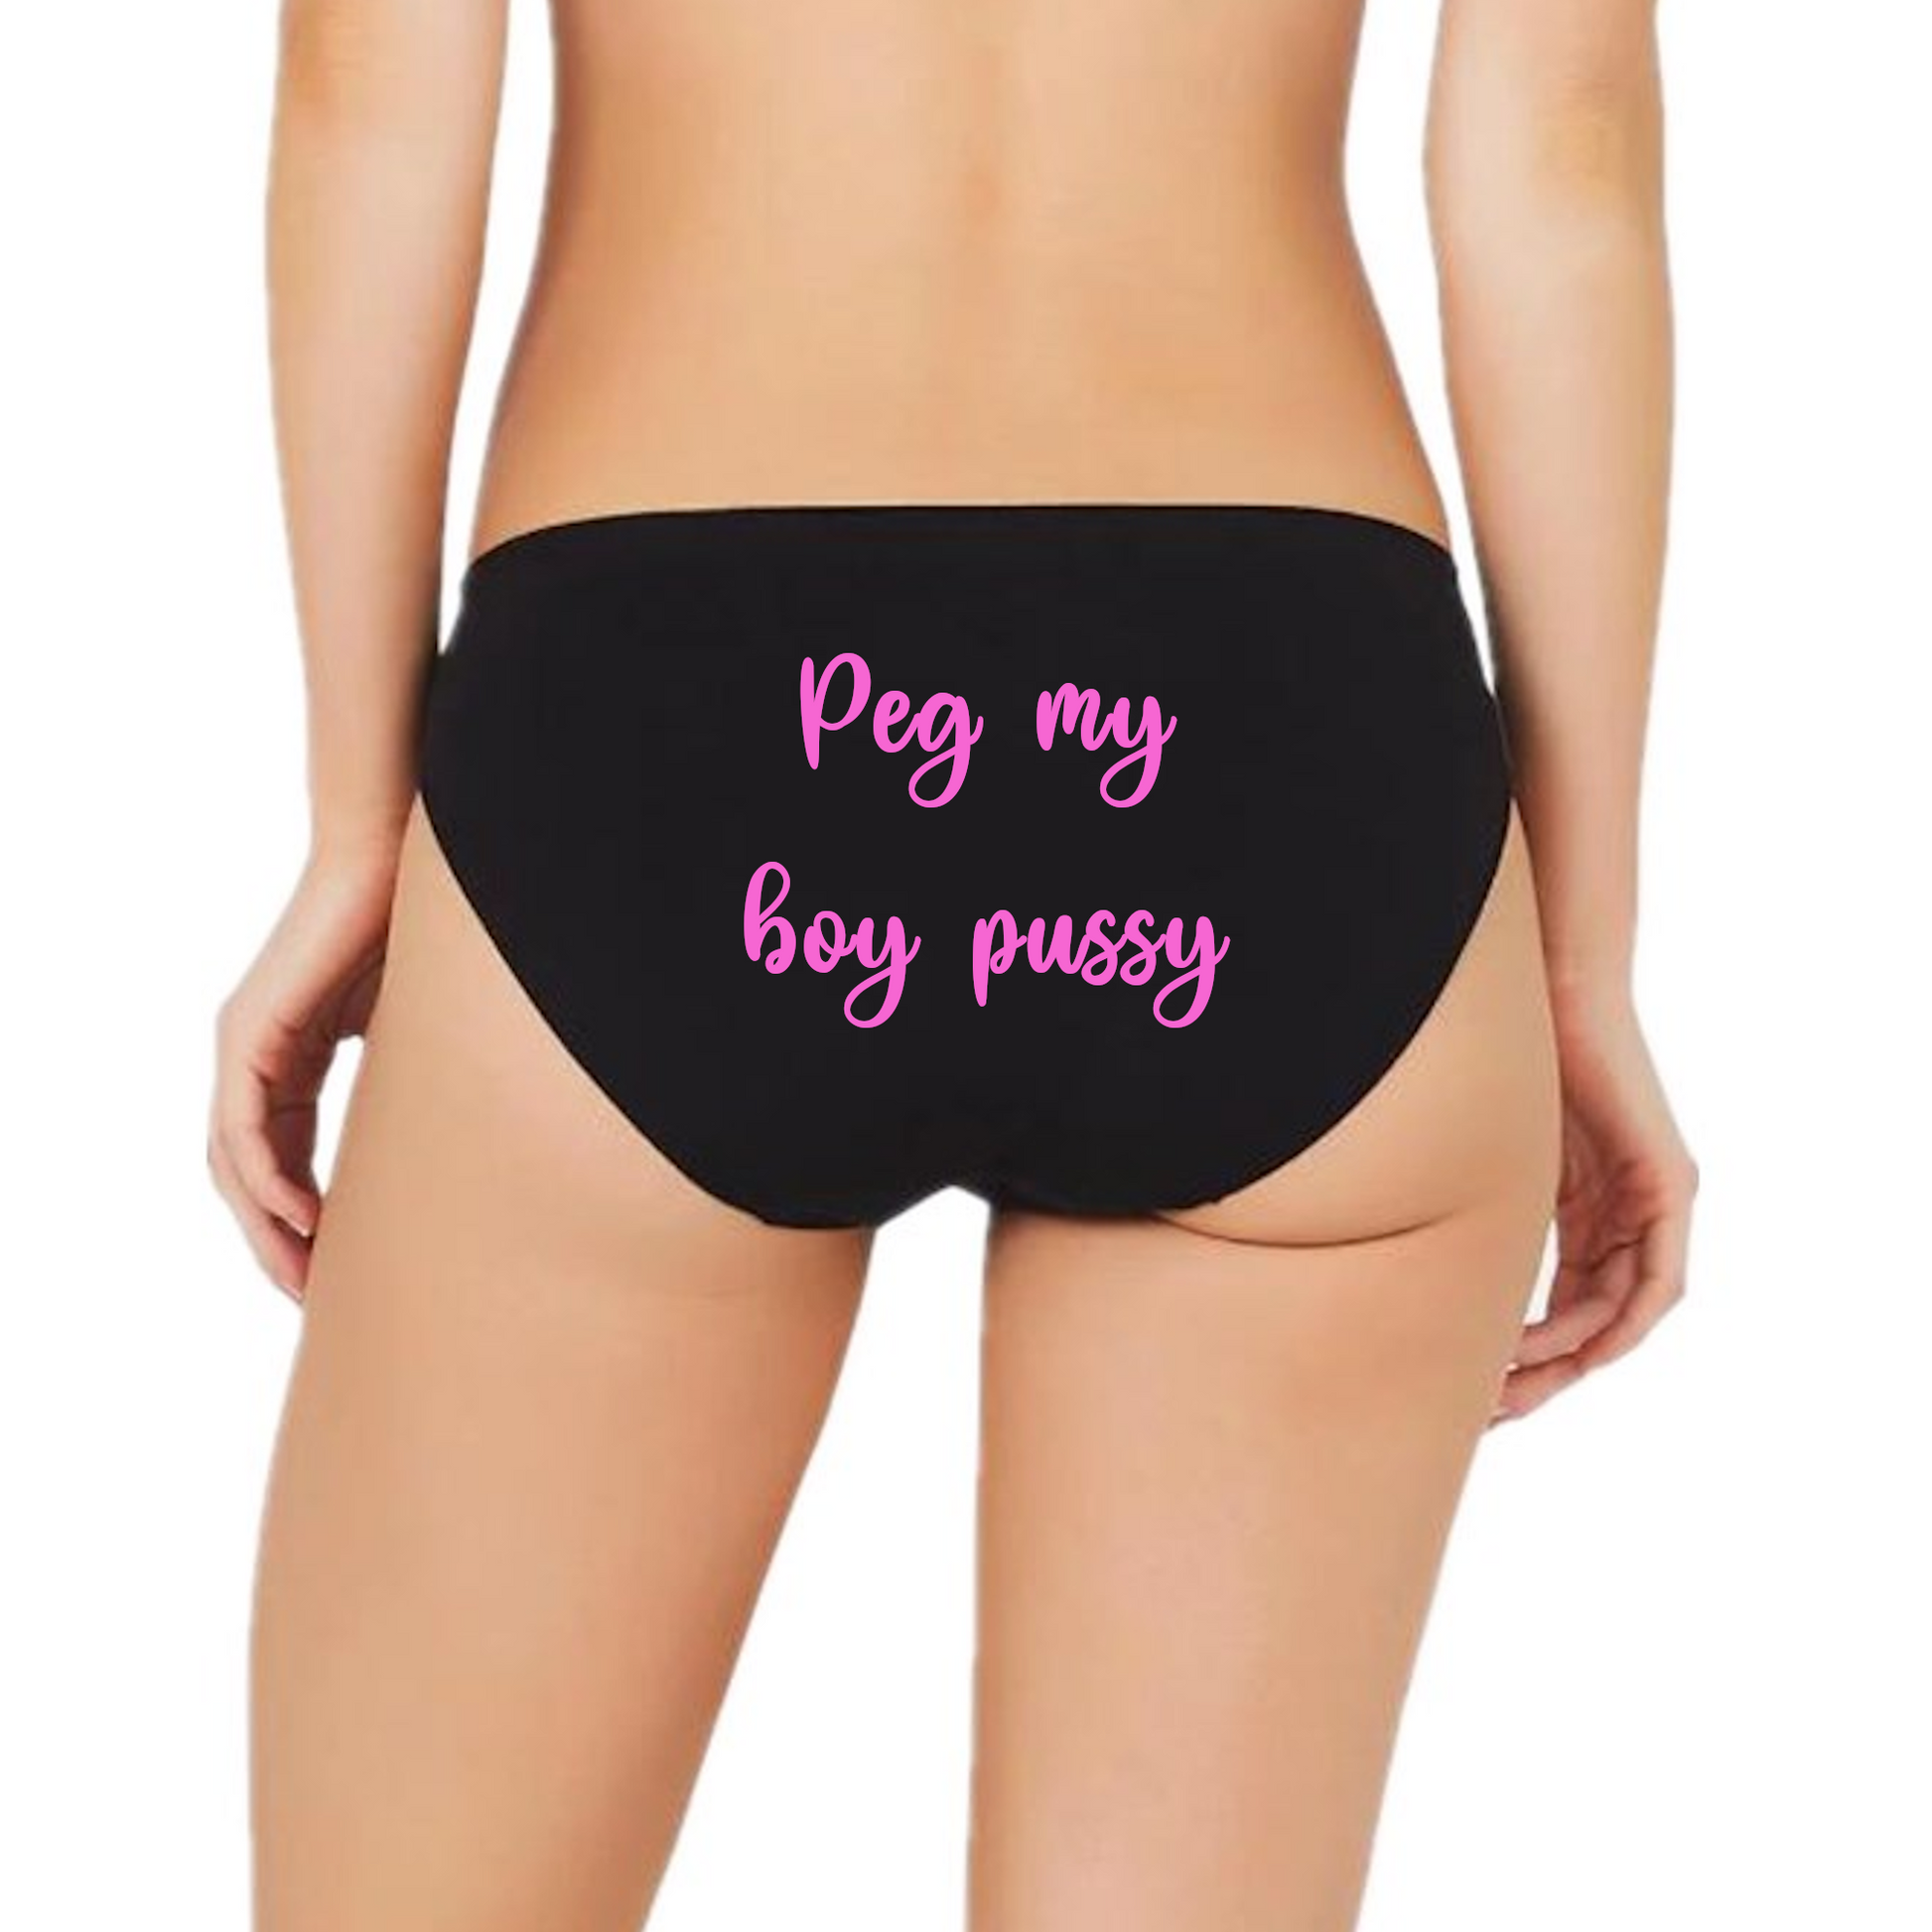 Peg me msub panties femboy lingerie